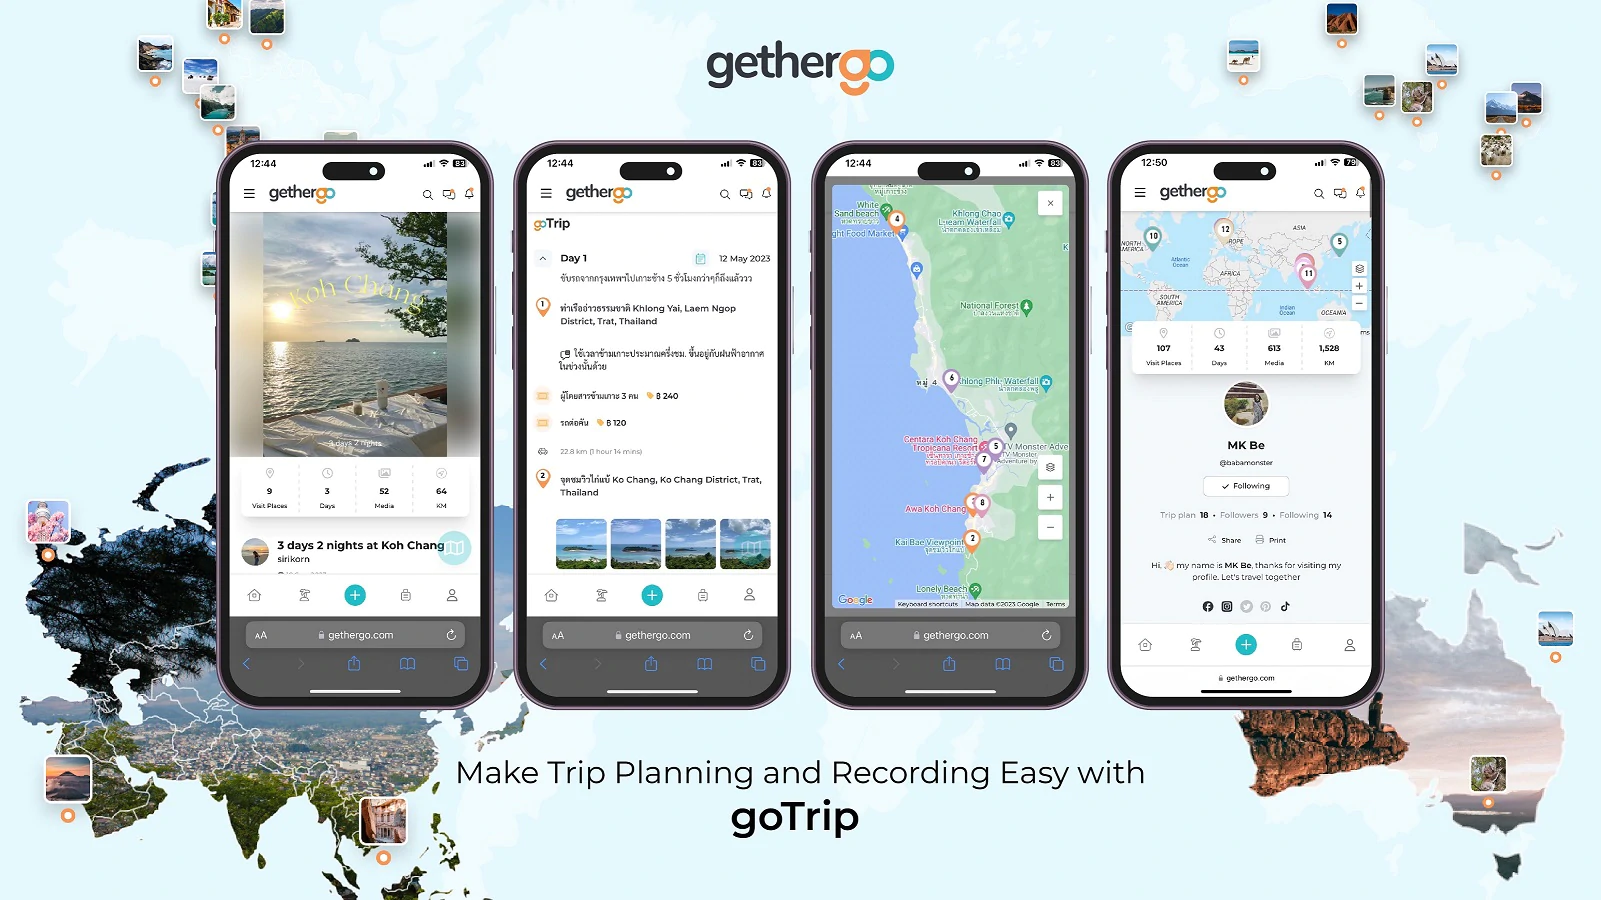 4 gethergo goTrip Feature | gethergo | เปิดตัว gethergo แพลตฟอร์มสัญชาติไทย เพื่อขั้นกว่าของการแพลนเที่ยว